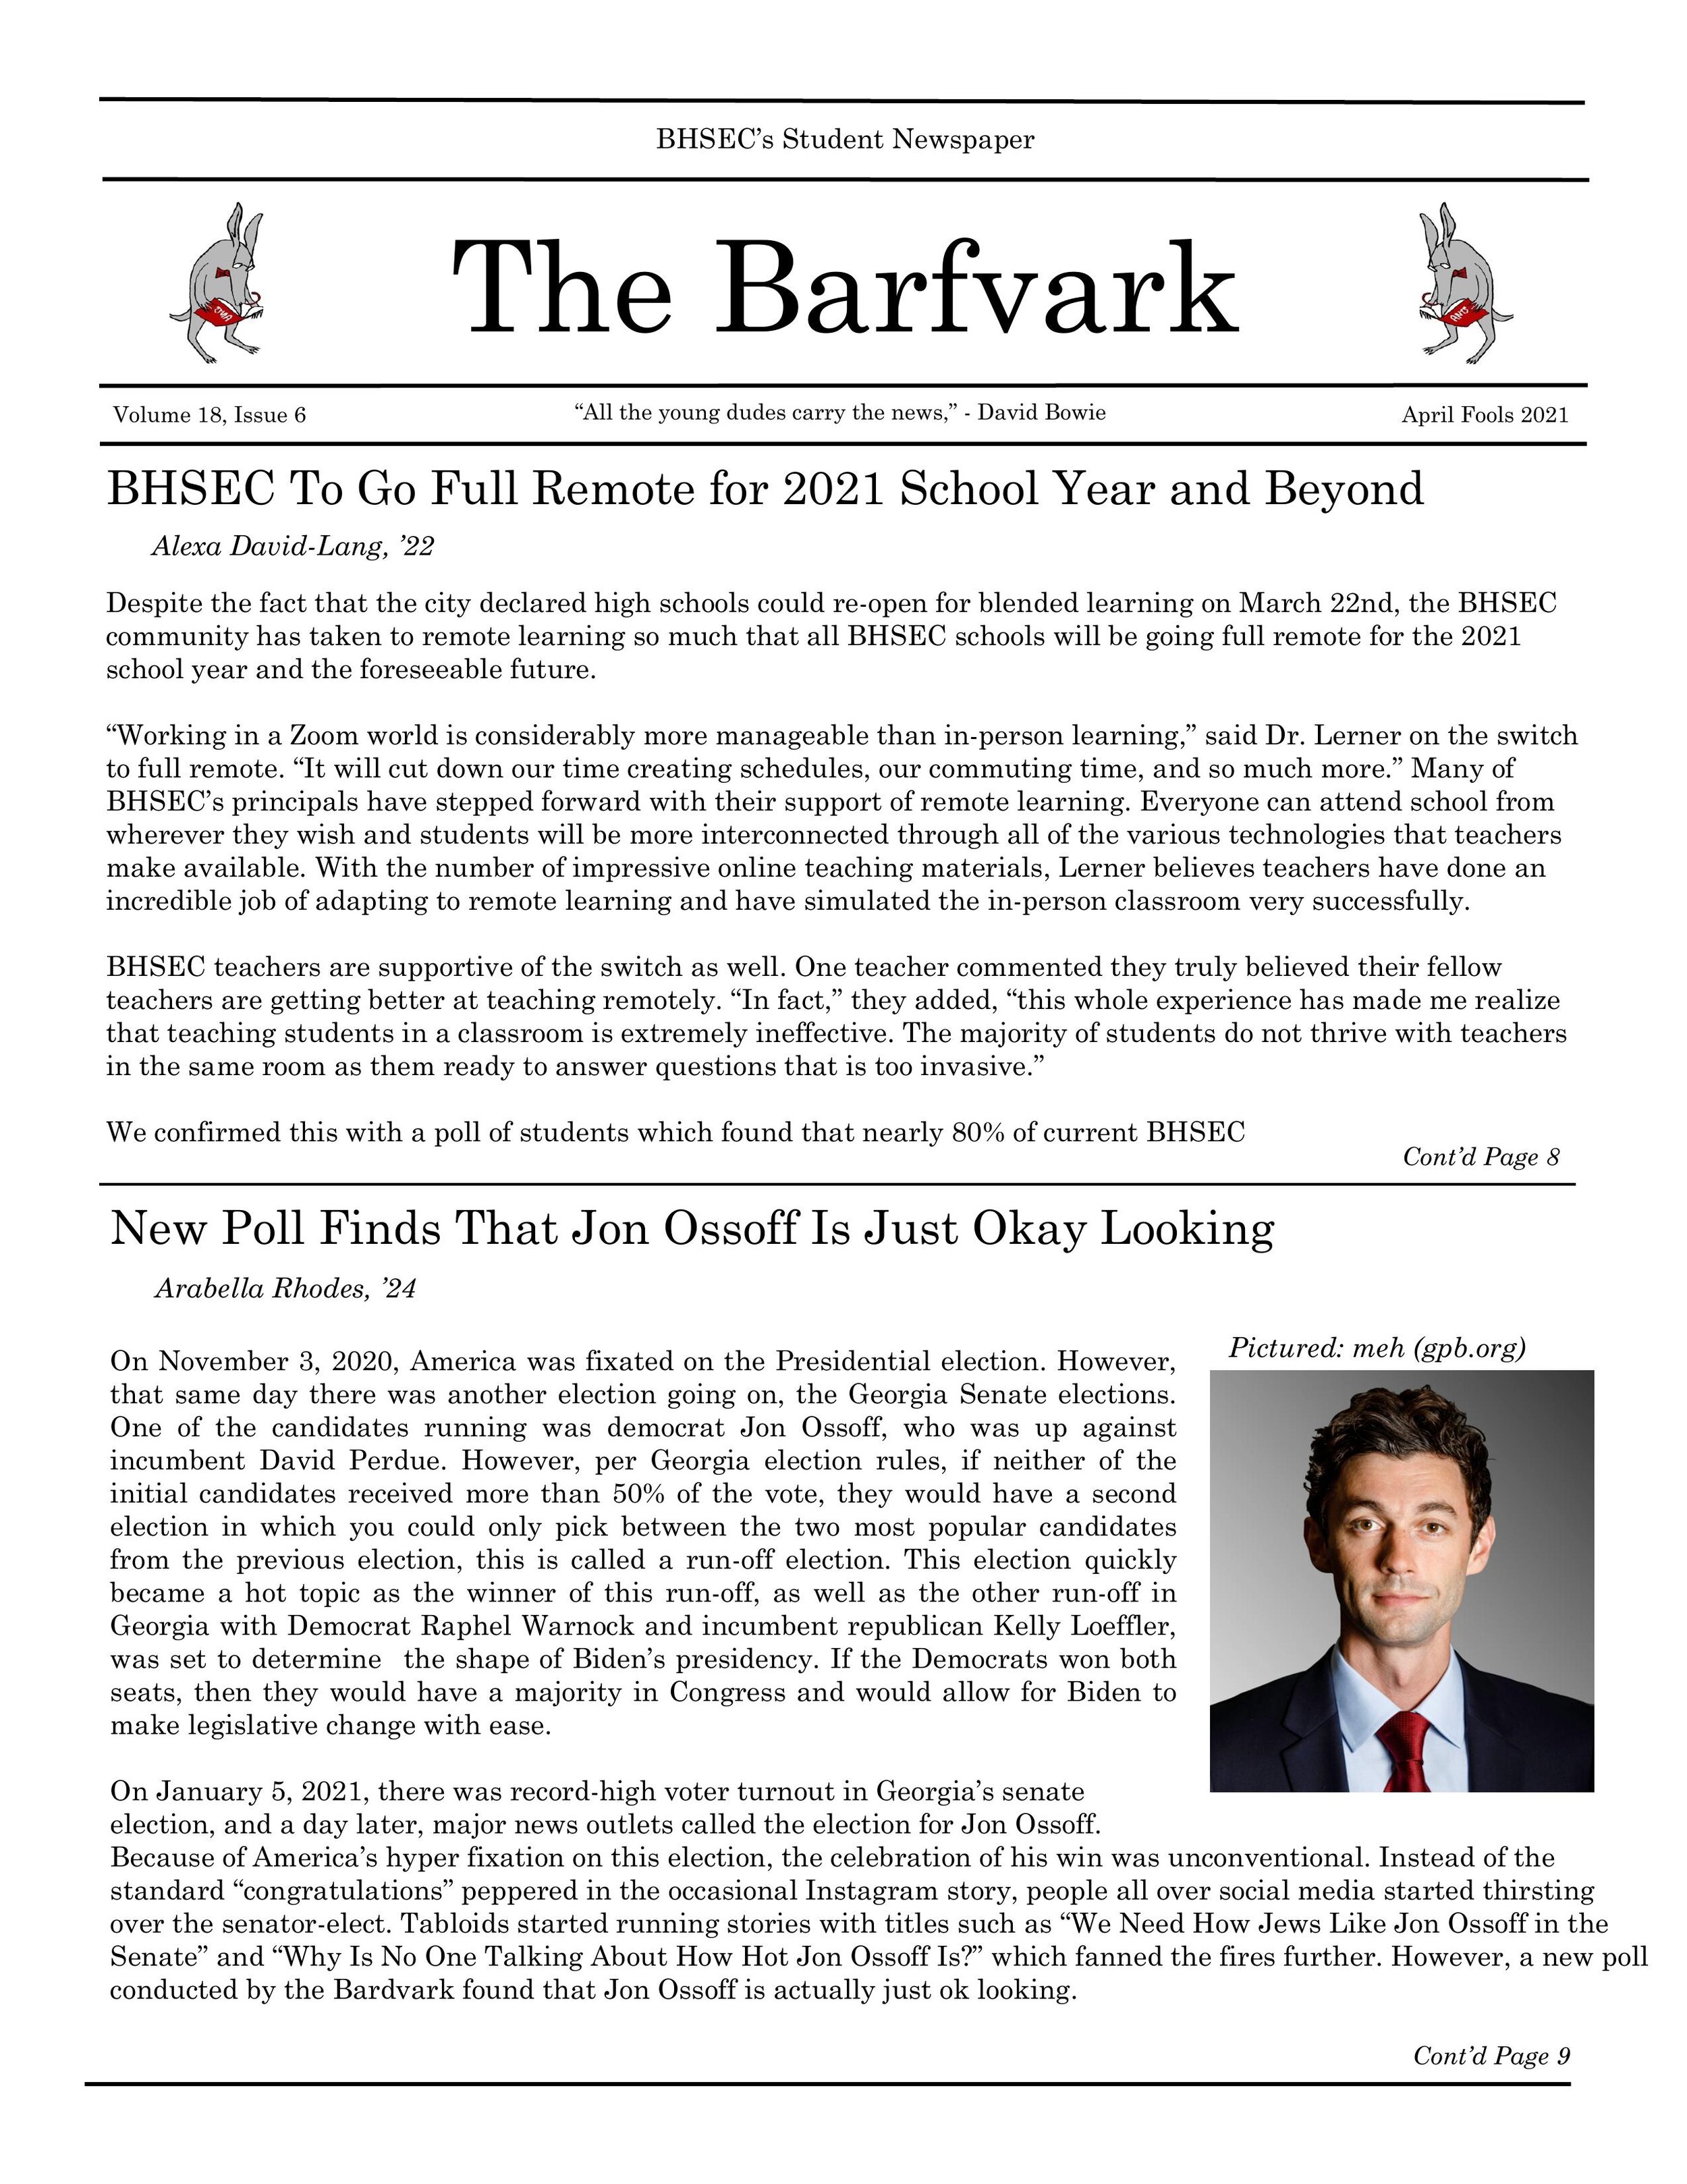 Bardvark Vol 18.65pages-1.jpg